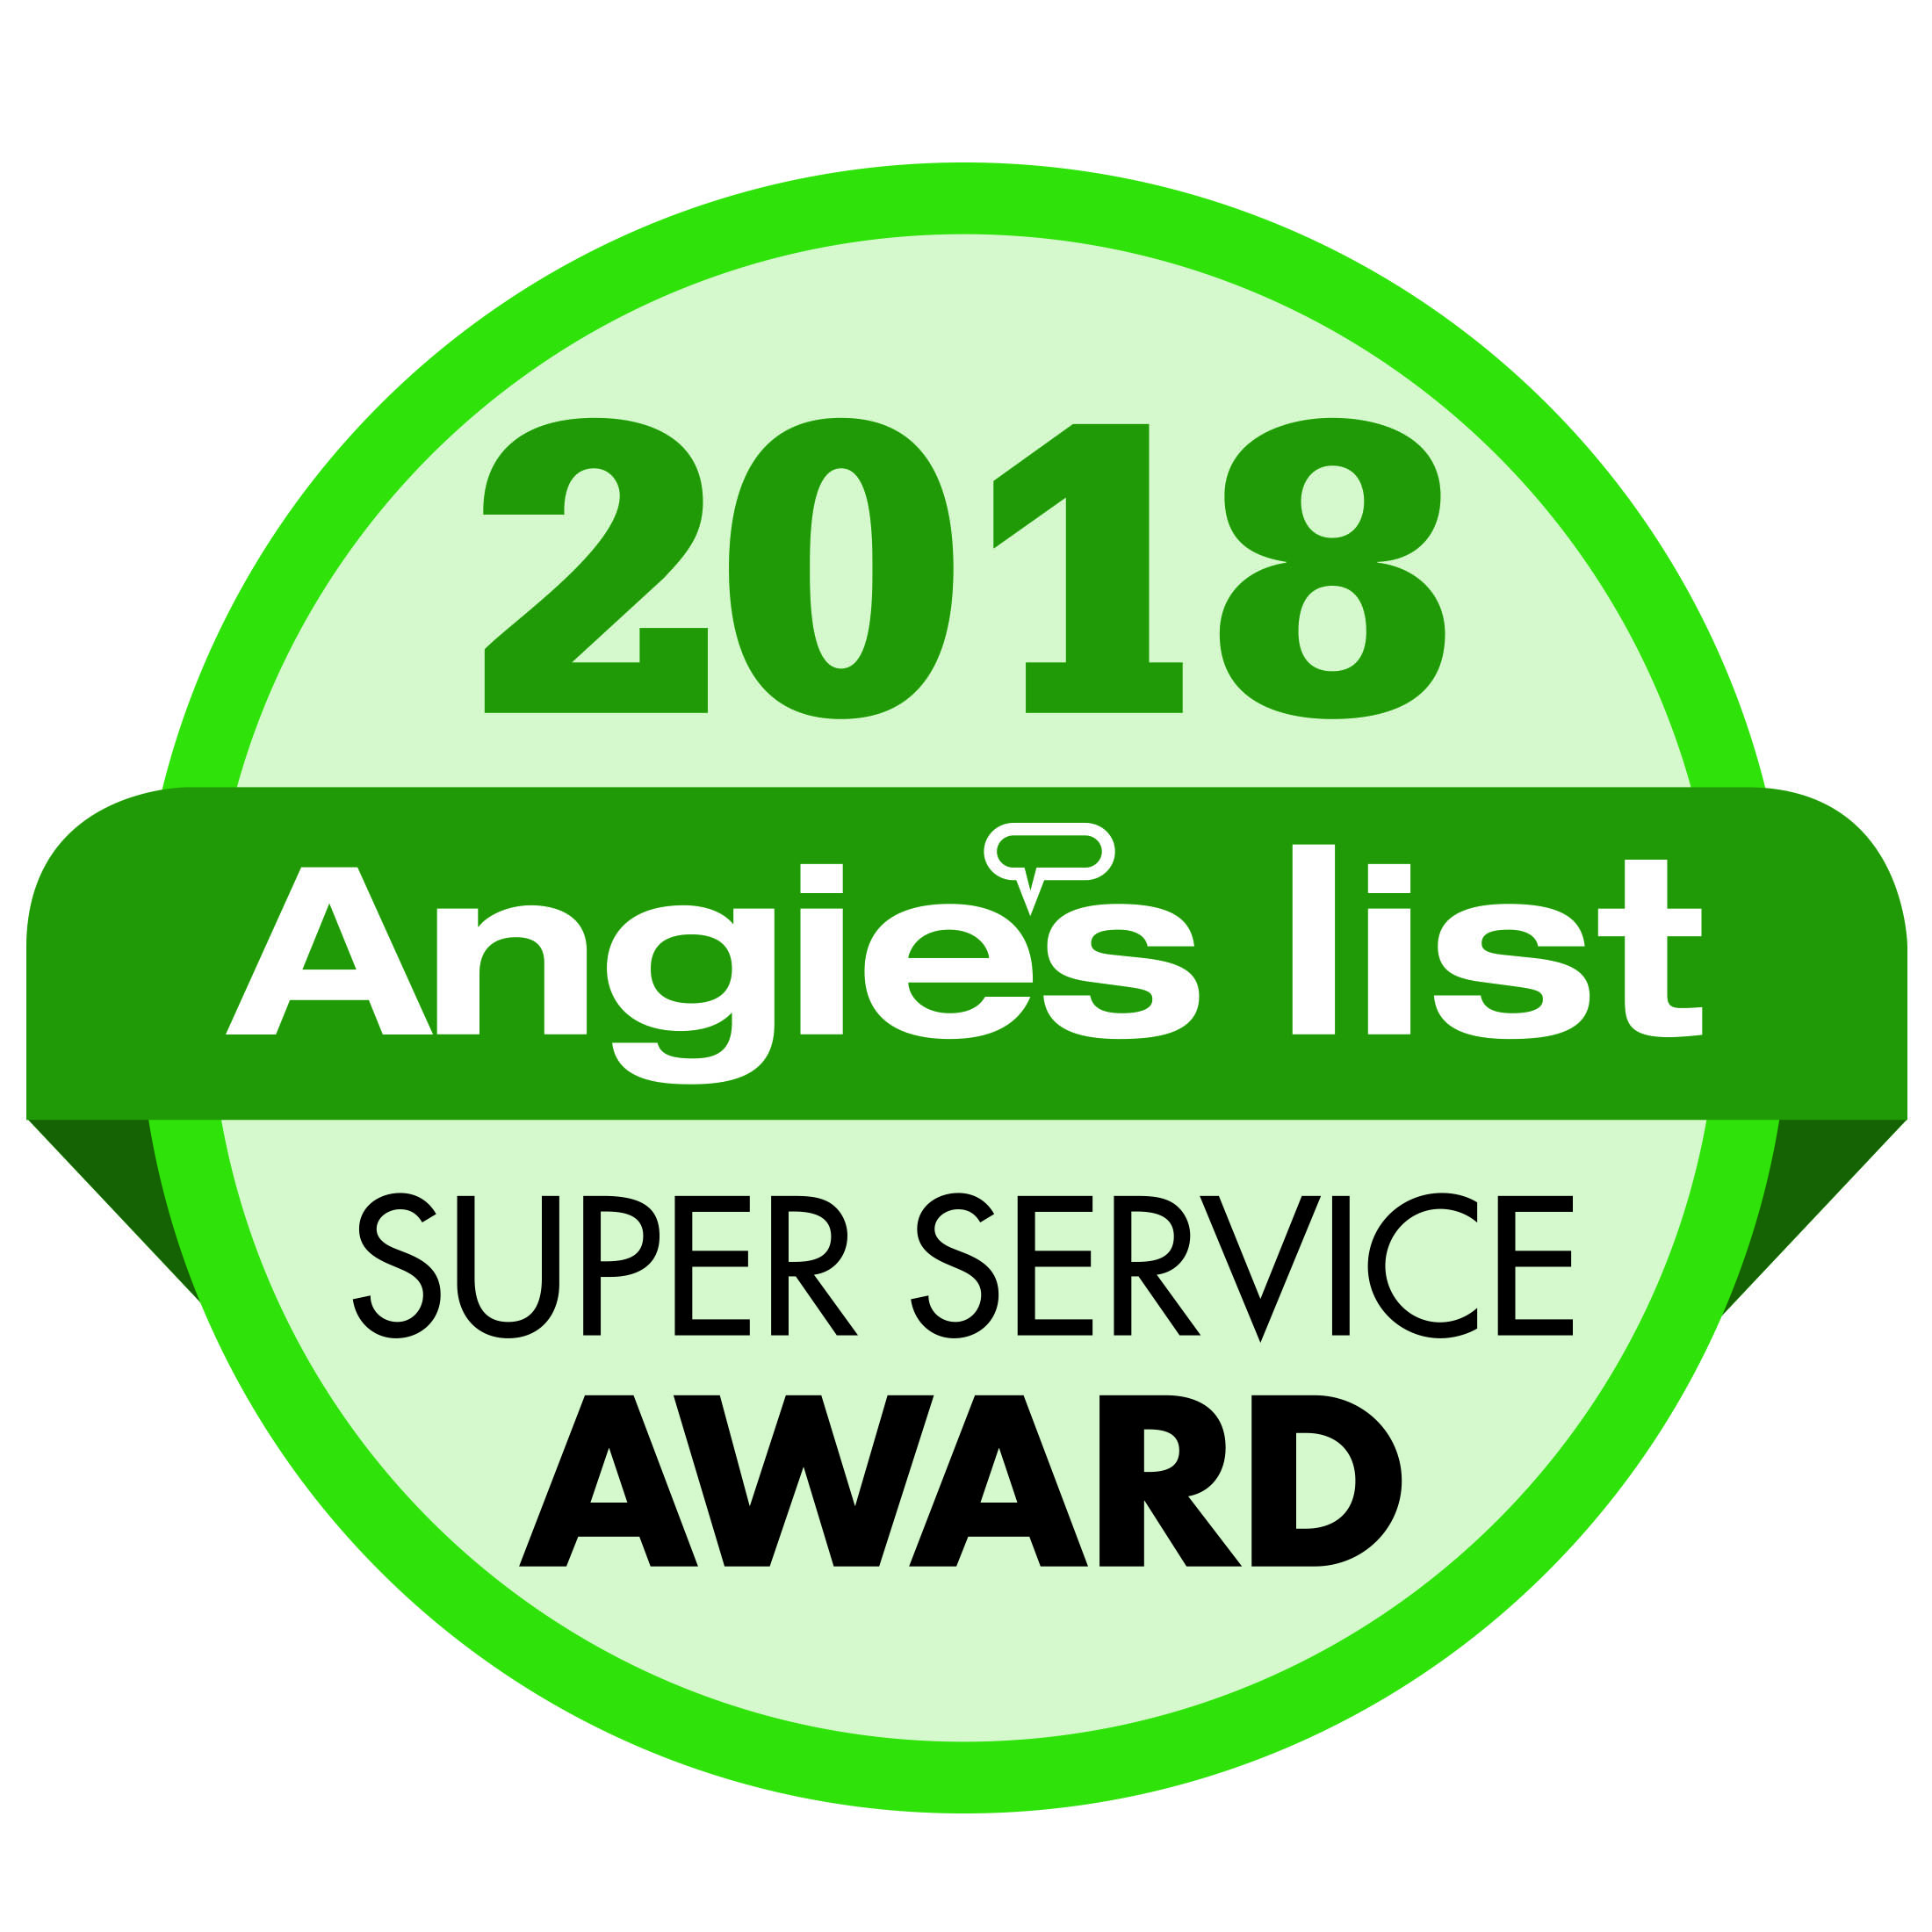 2018 ANGIES LIST SUPER SERVICE AWARD.jpg